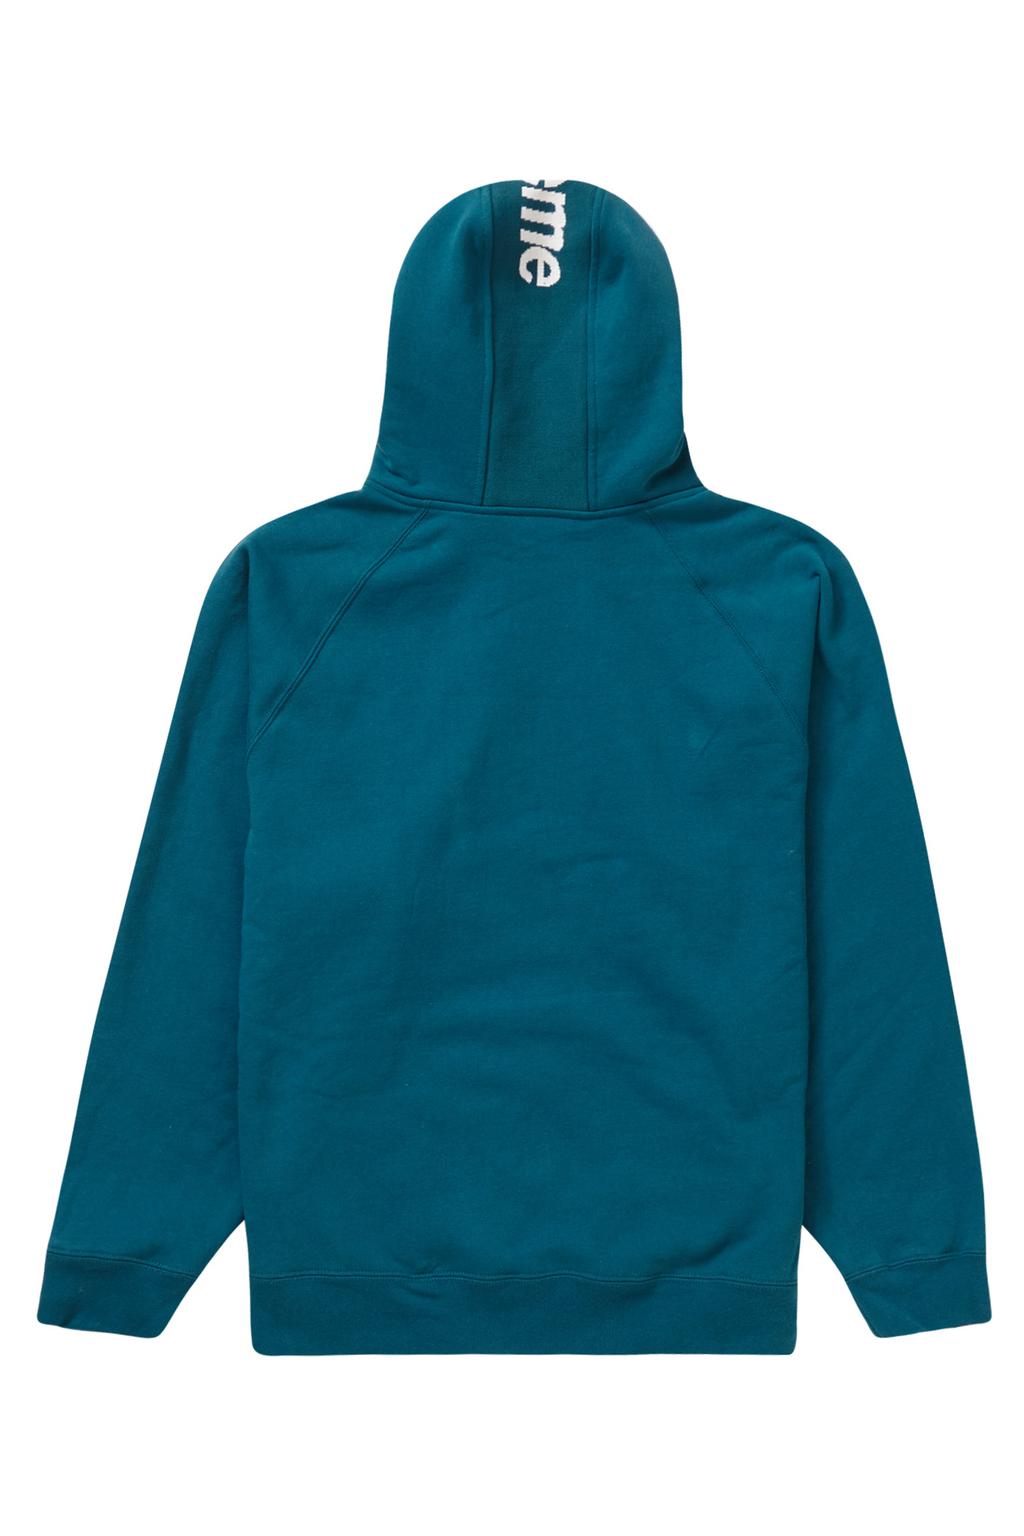 Supreme Brim Zip Up Hooded Sweatshirt Marine Blue - Sole Cart